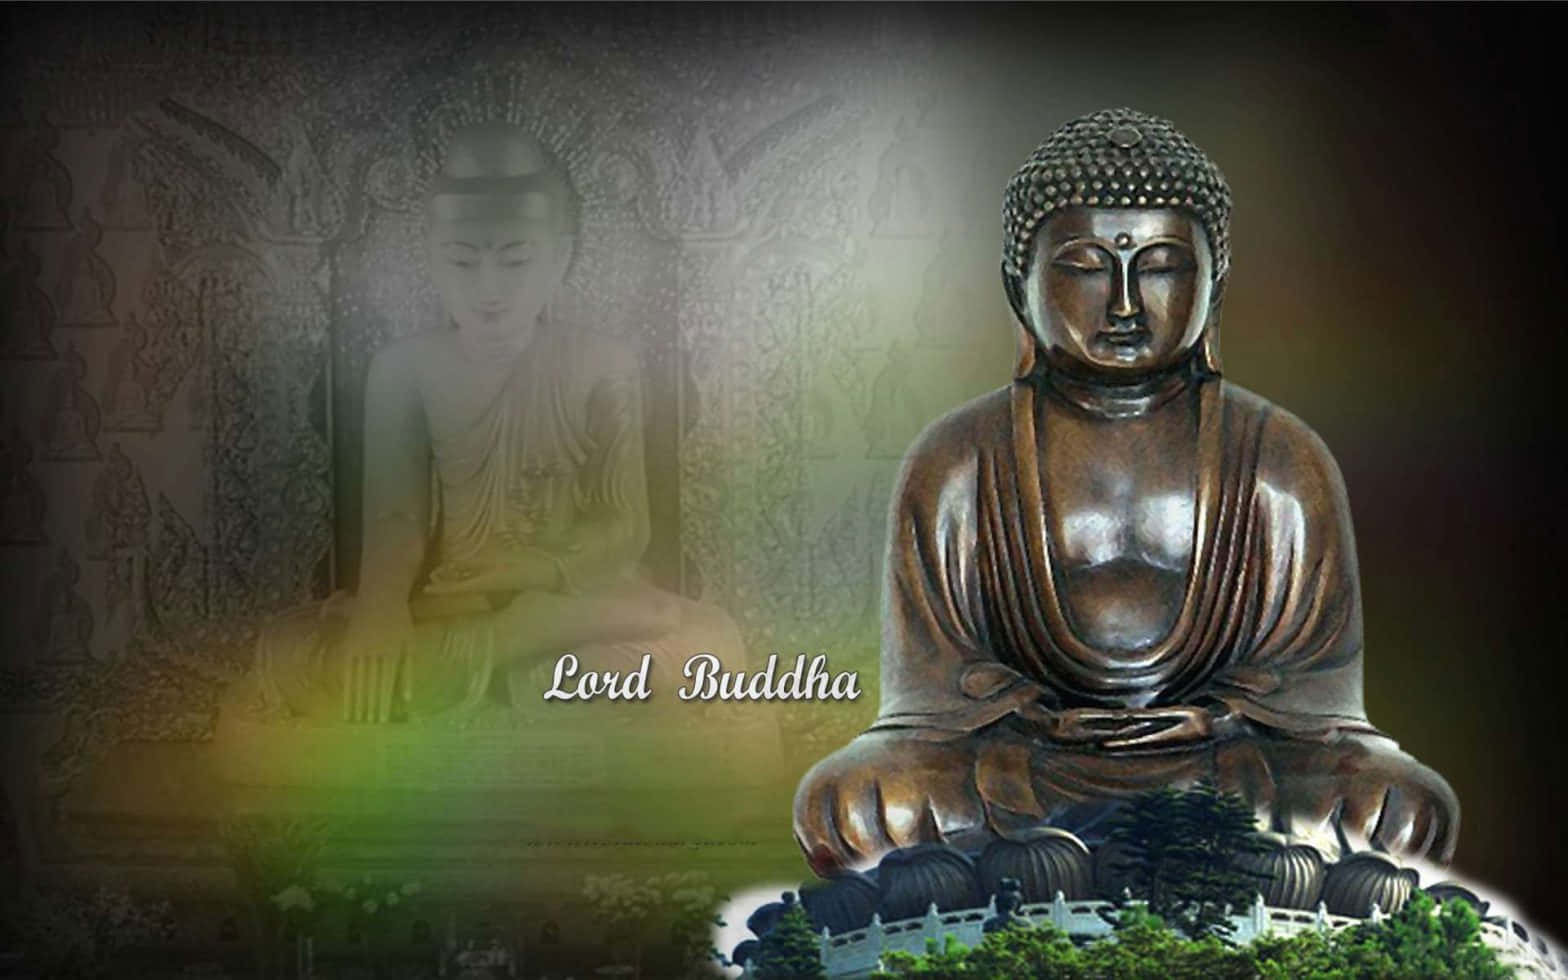 A peaceful Buddha